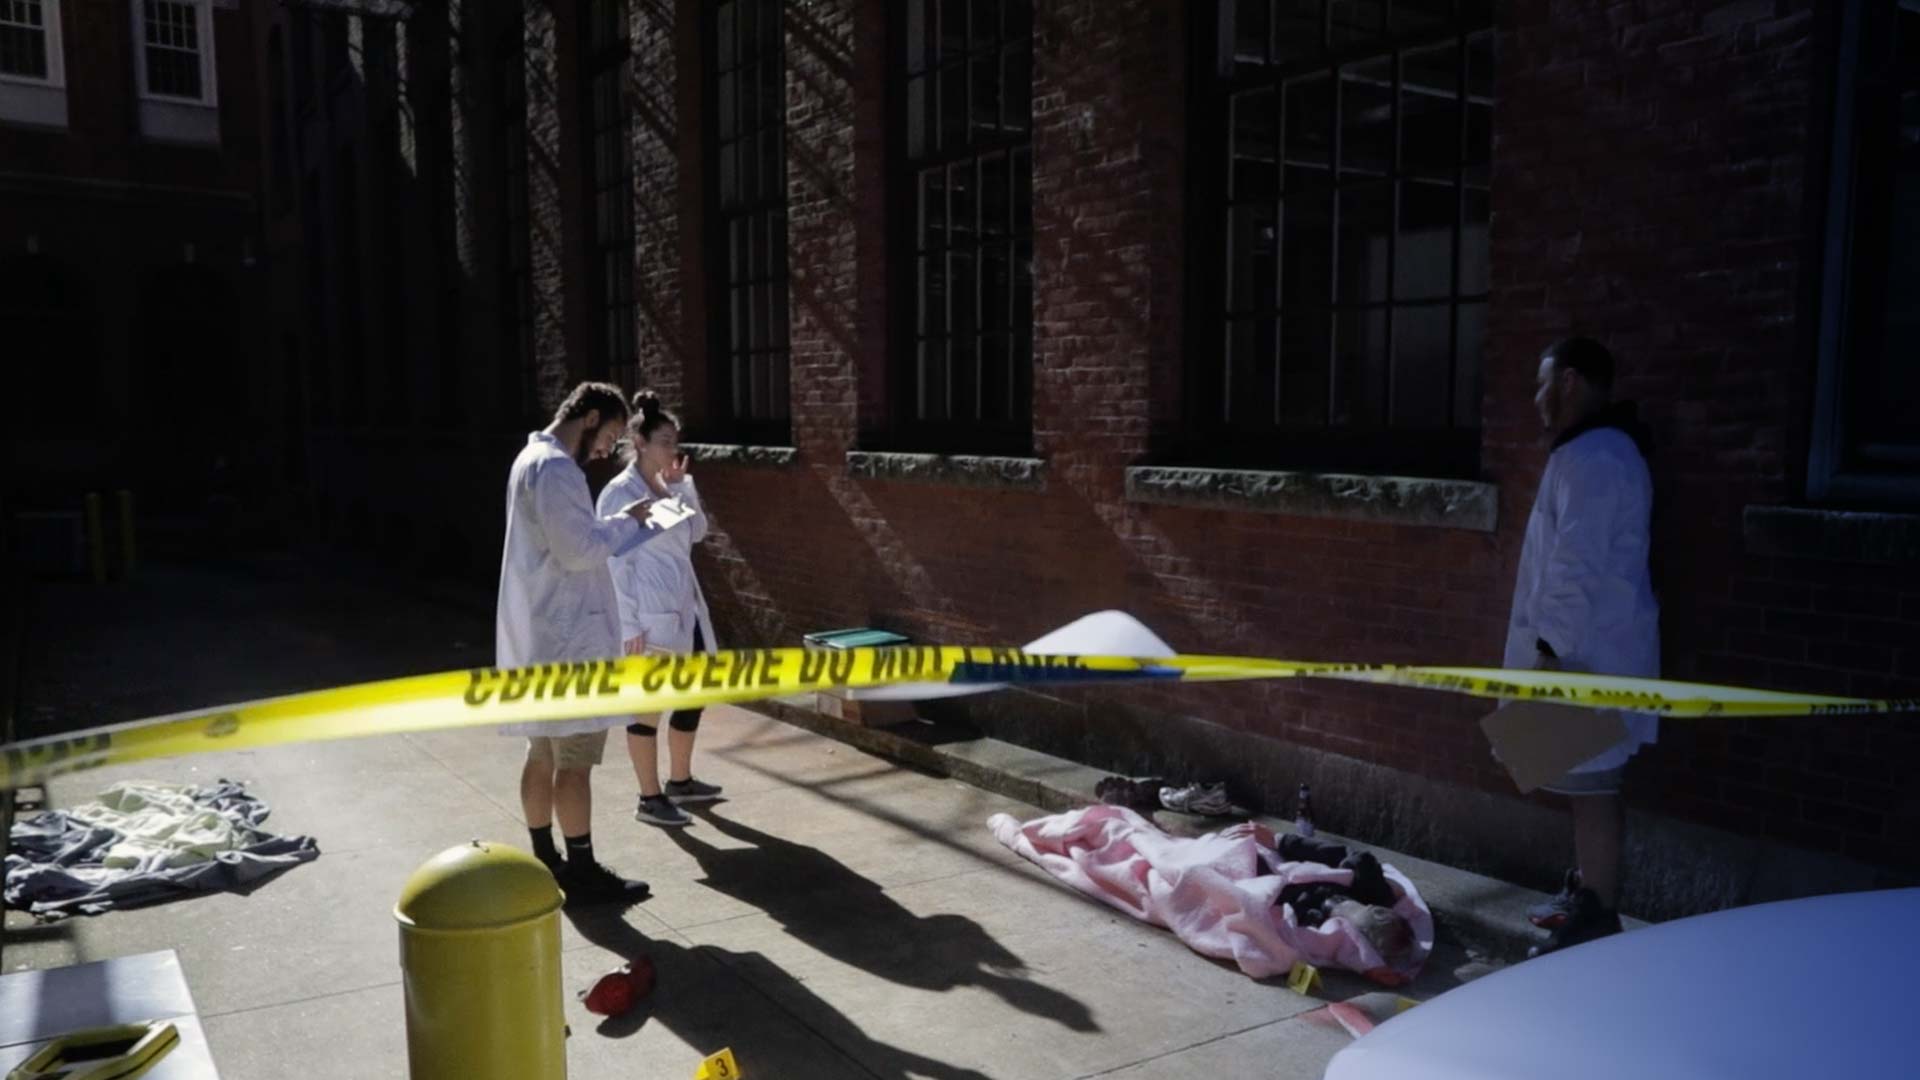 JWU students at mock crime scene